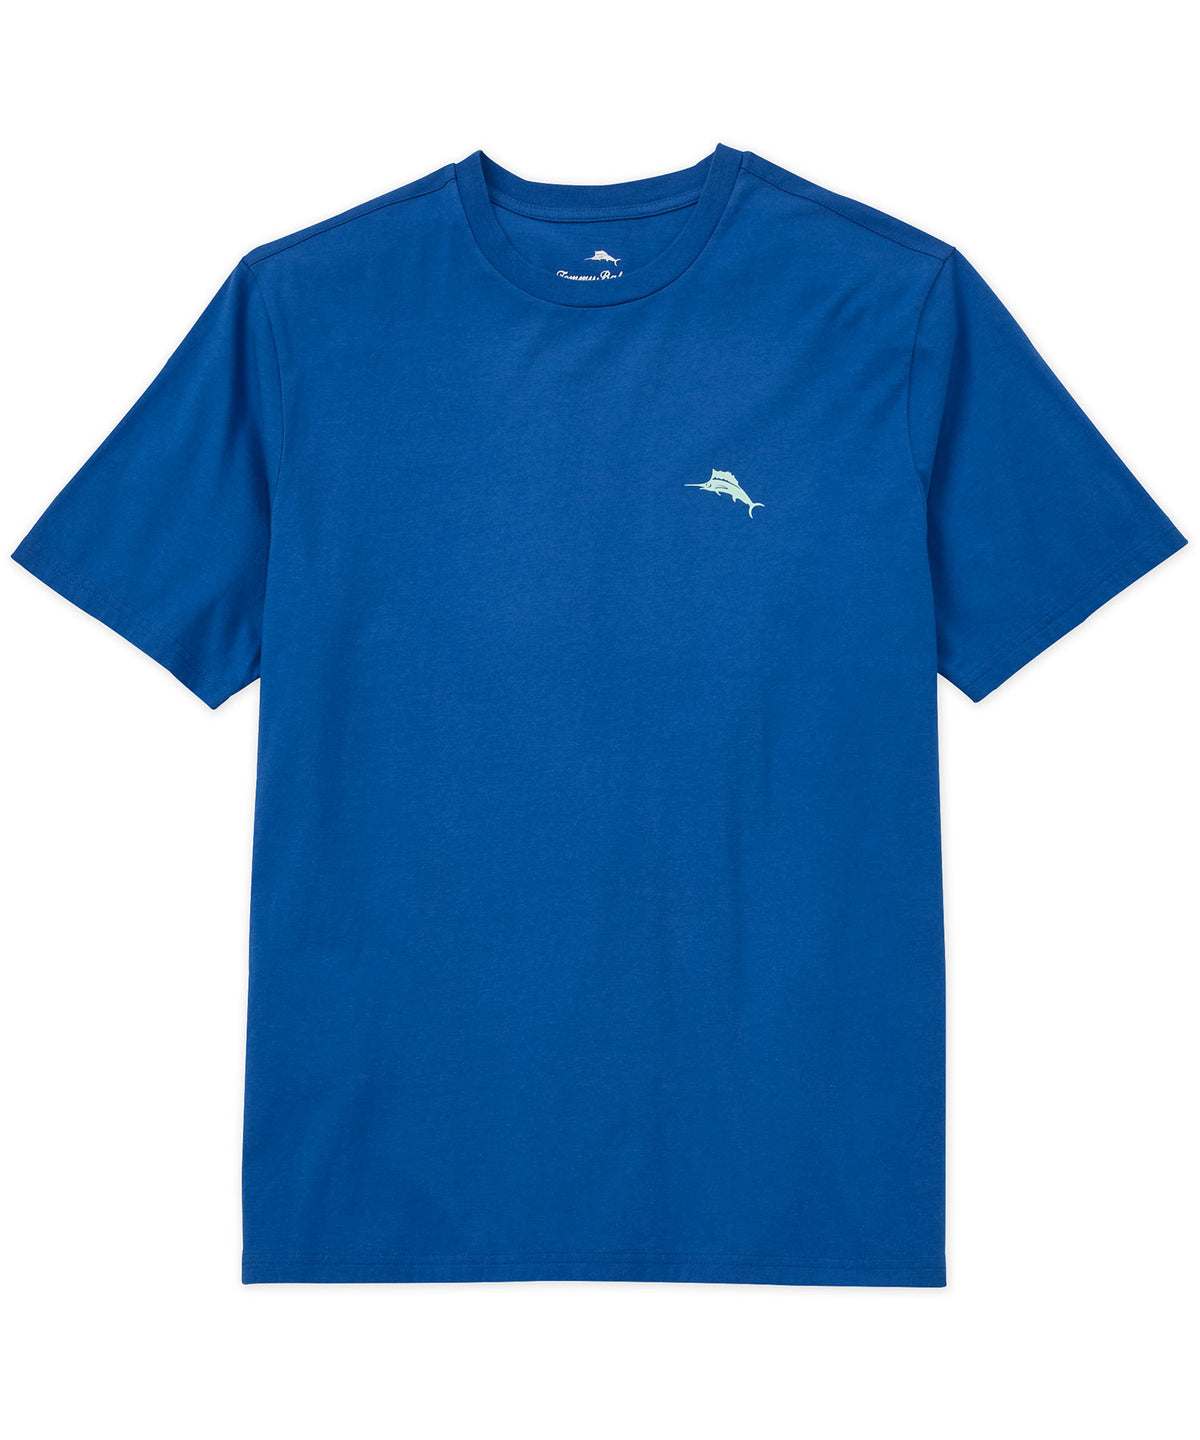 Tommy Bahama Short Sleeve 'Marlin Rising' Crew Neck T-Shirt, Big & Tall